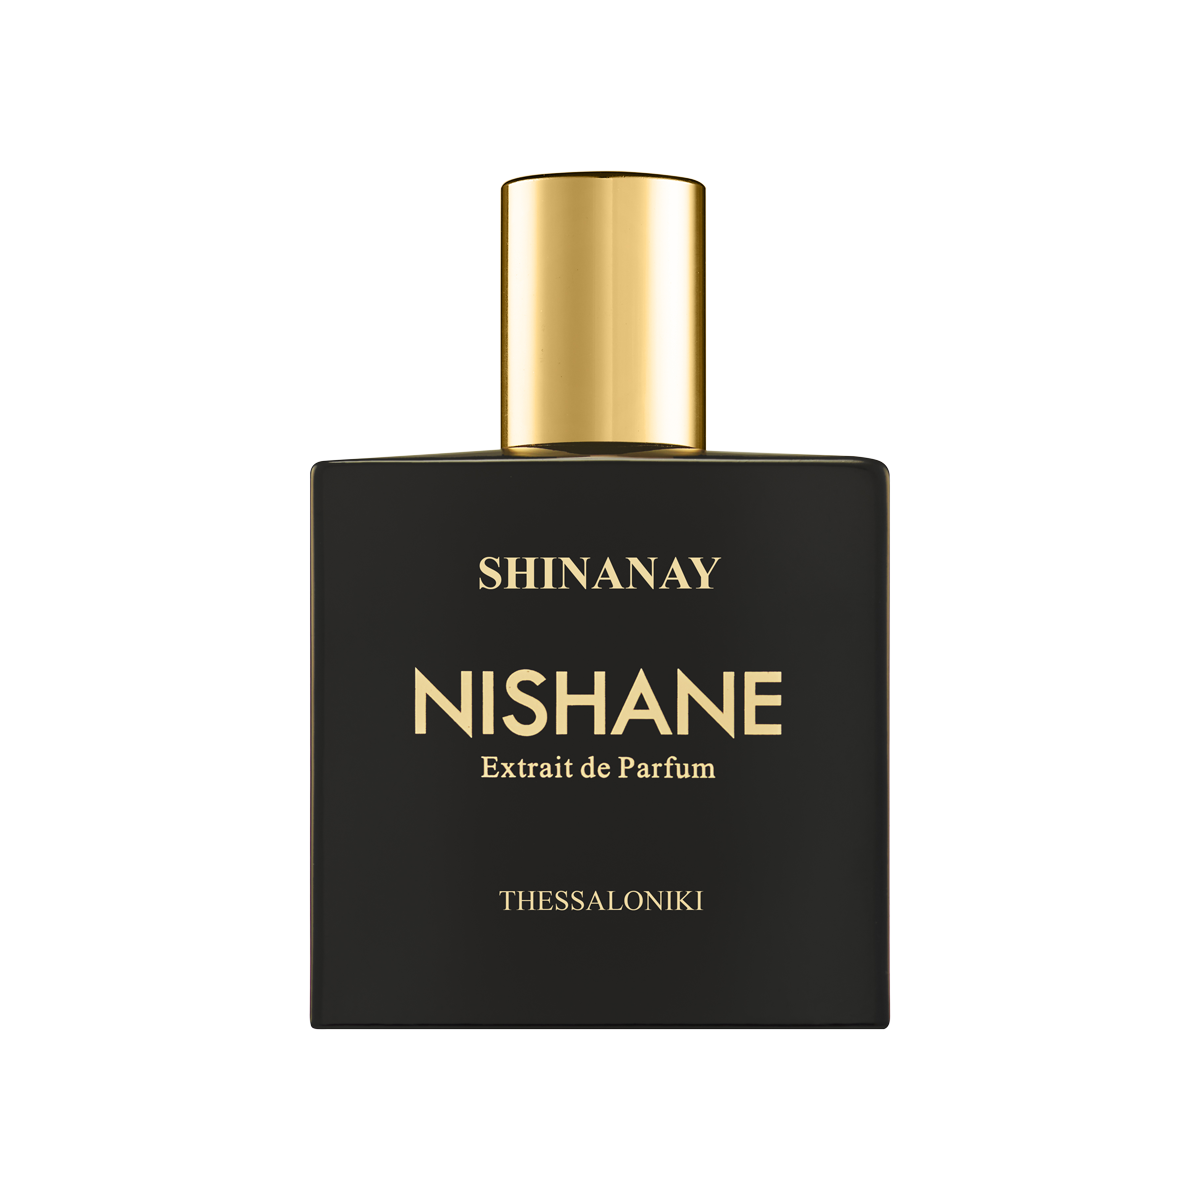 Nishane - Shinanay Extrait de Parfum